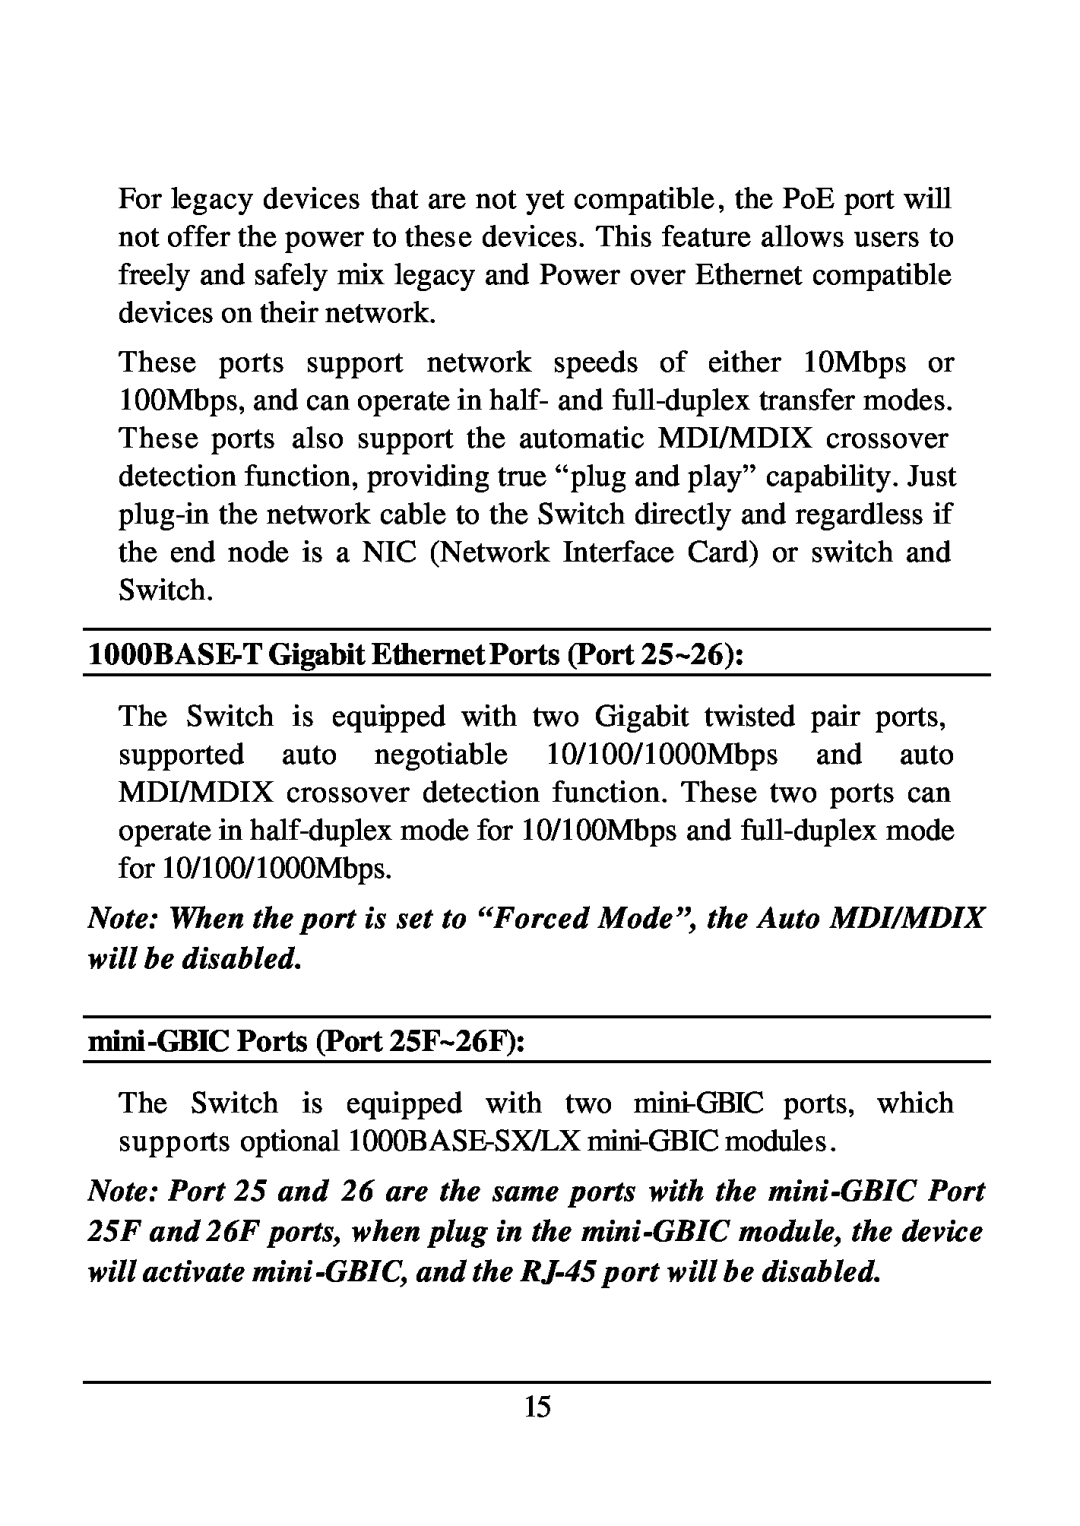 D-Link DES-1526 manual 1000BASE-TGigabit Ethernet Ports Port 25~26, mini-GBICPorts Port 25F~26F 